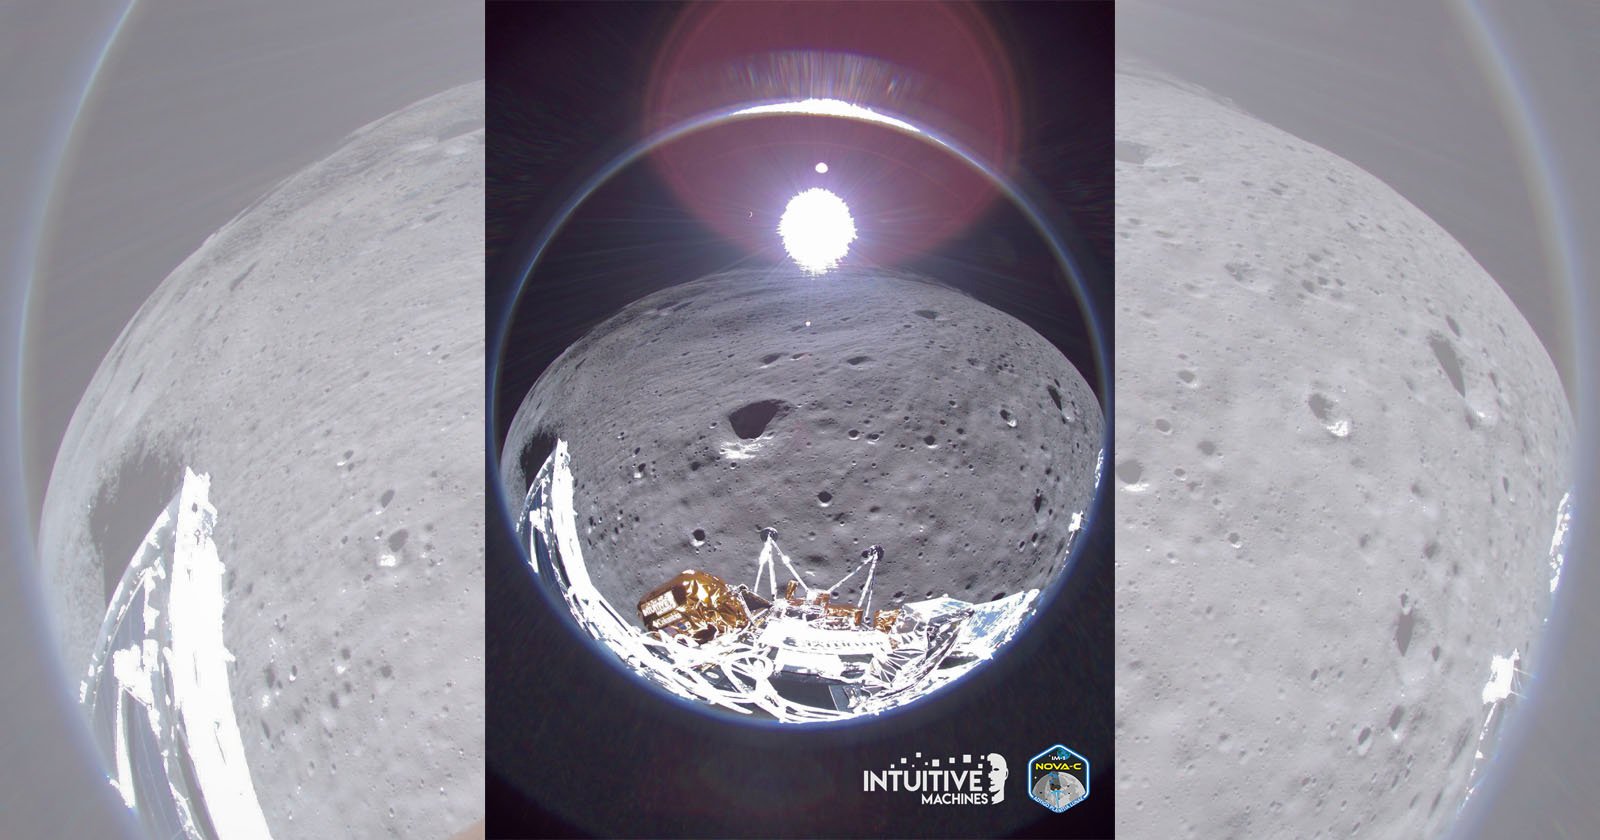  odysseus moon lander sent one final photo 